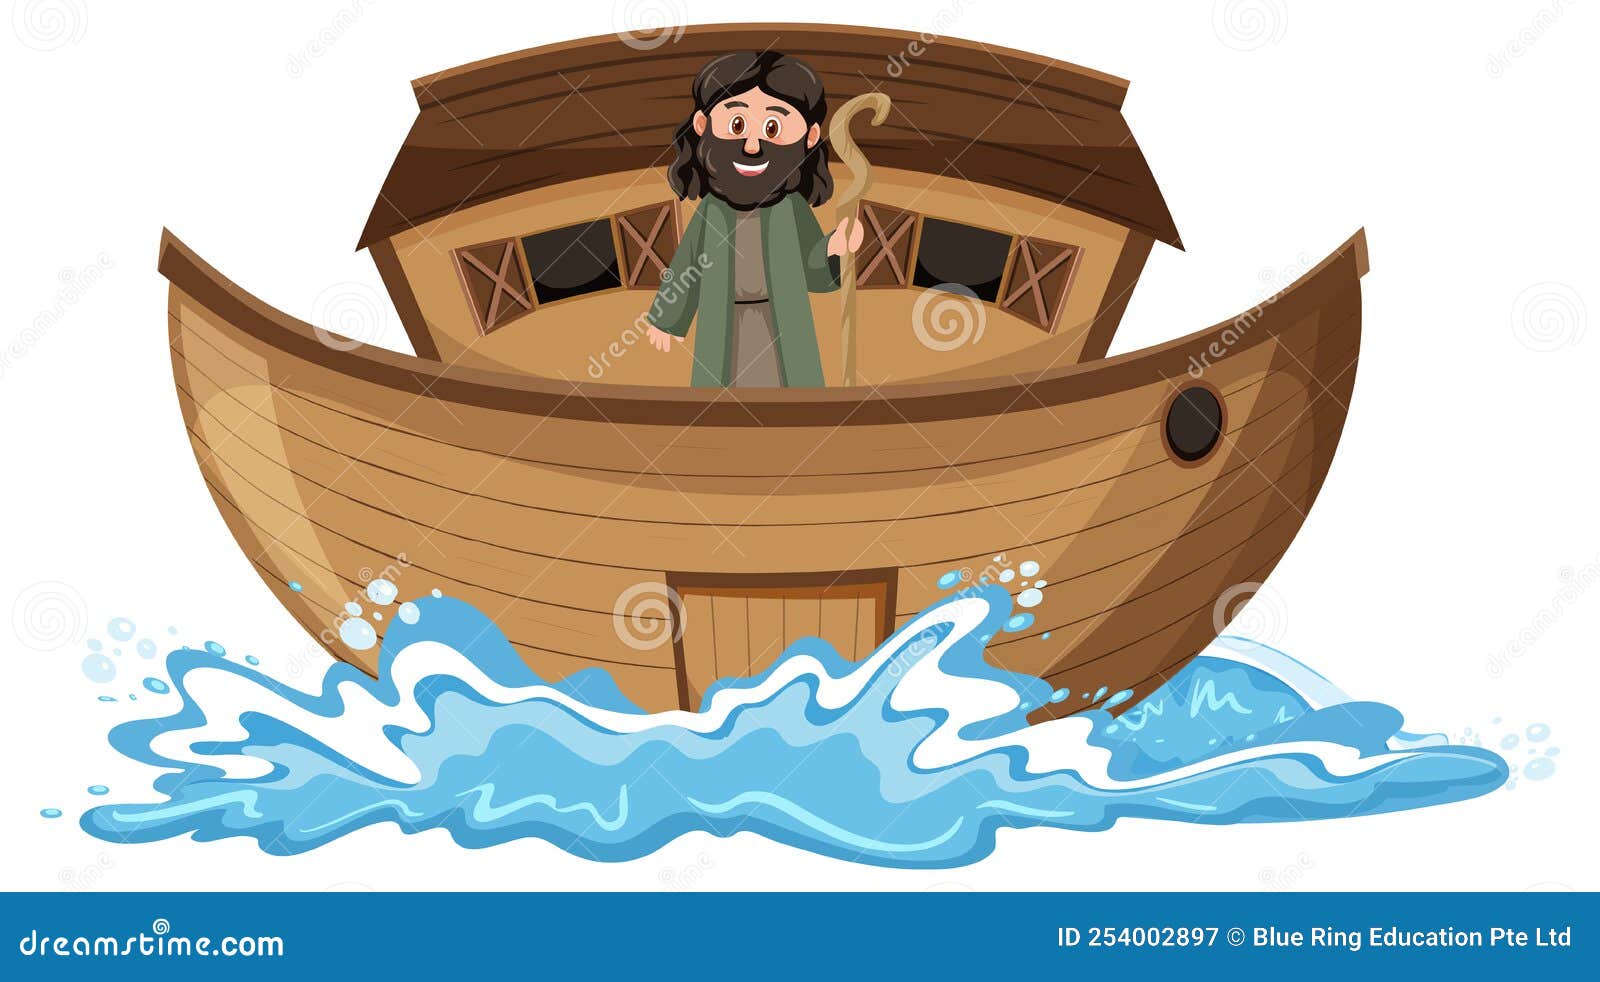 Noahs Ark And Cartoon Character Set | CartoonDealer.com #254002897